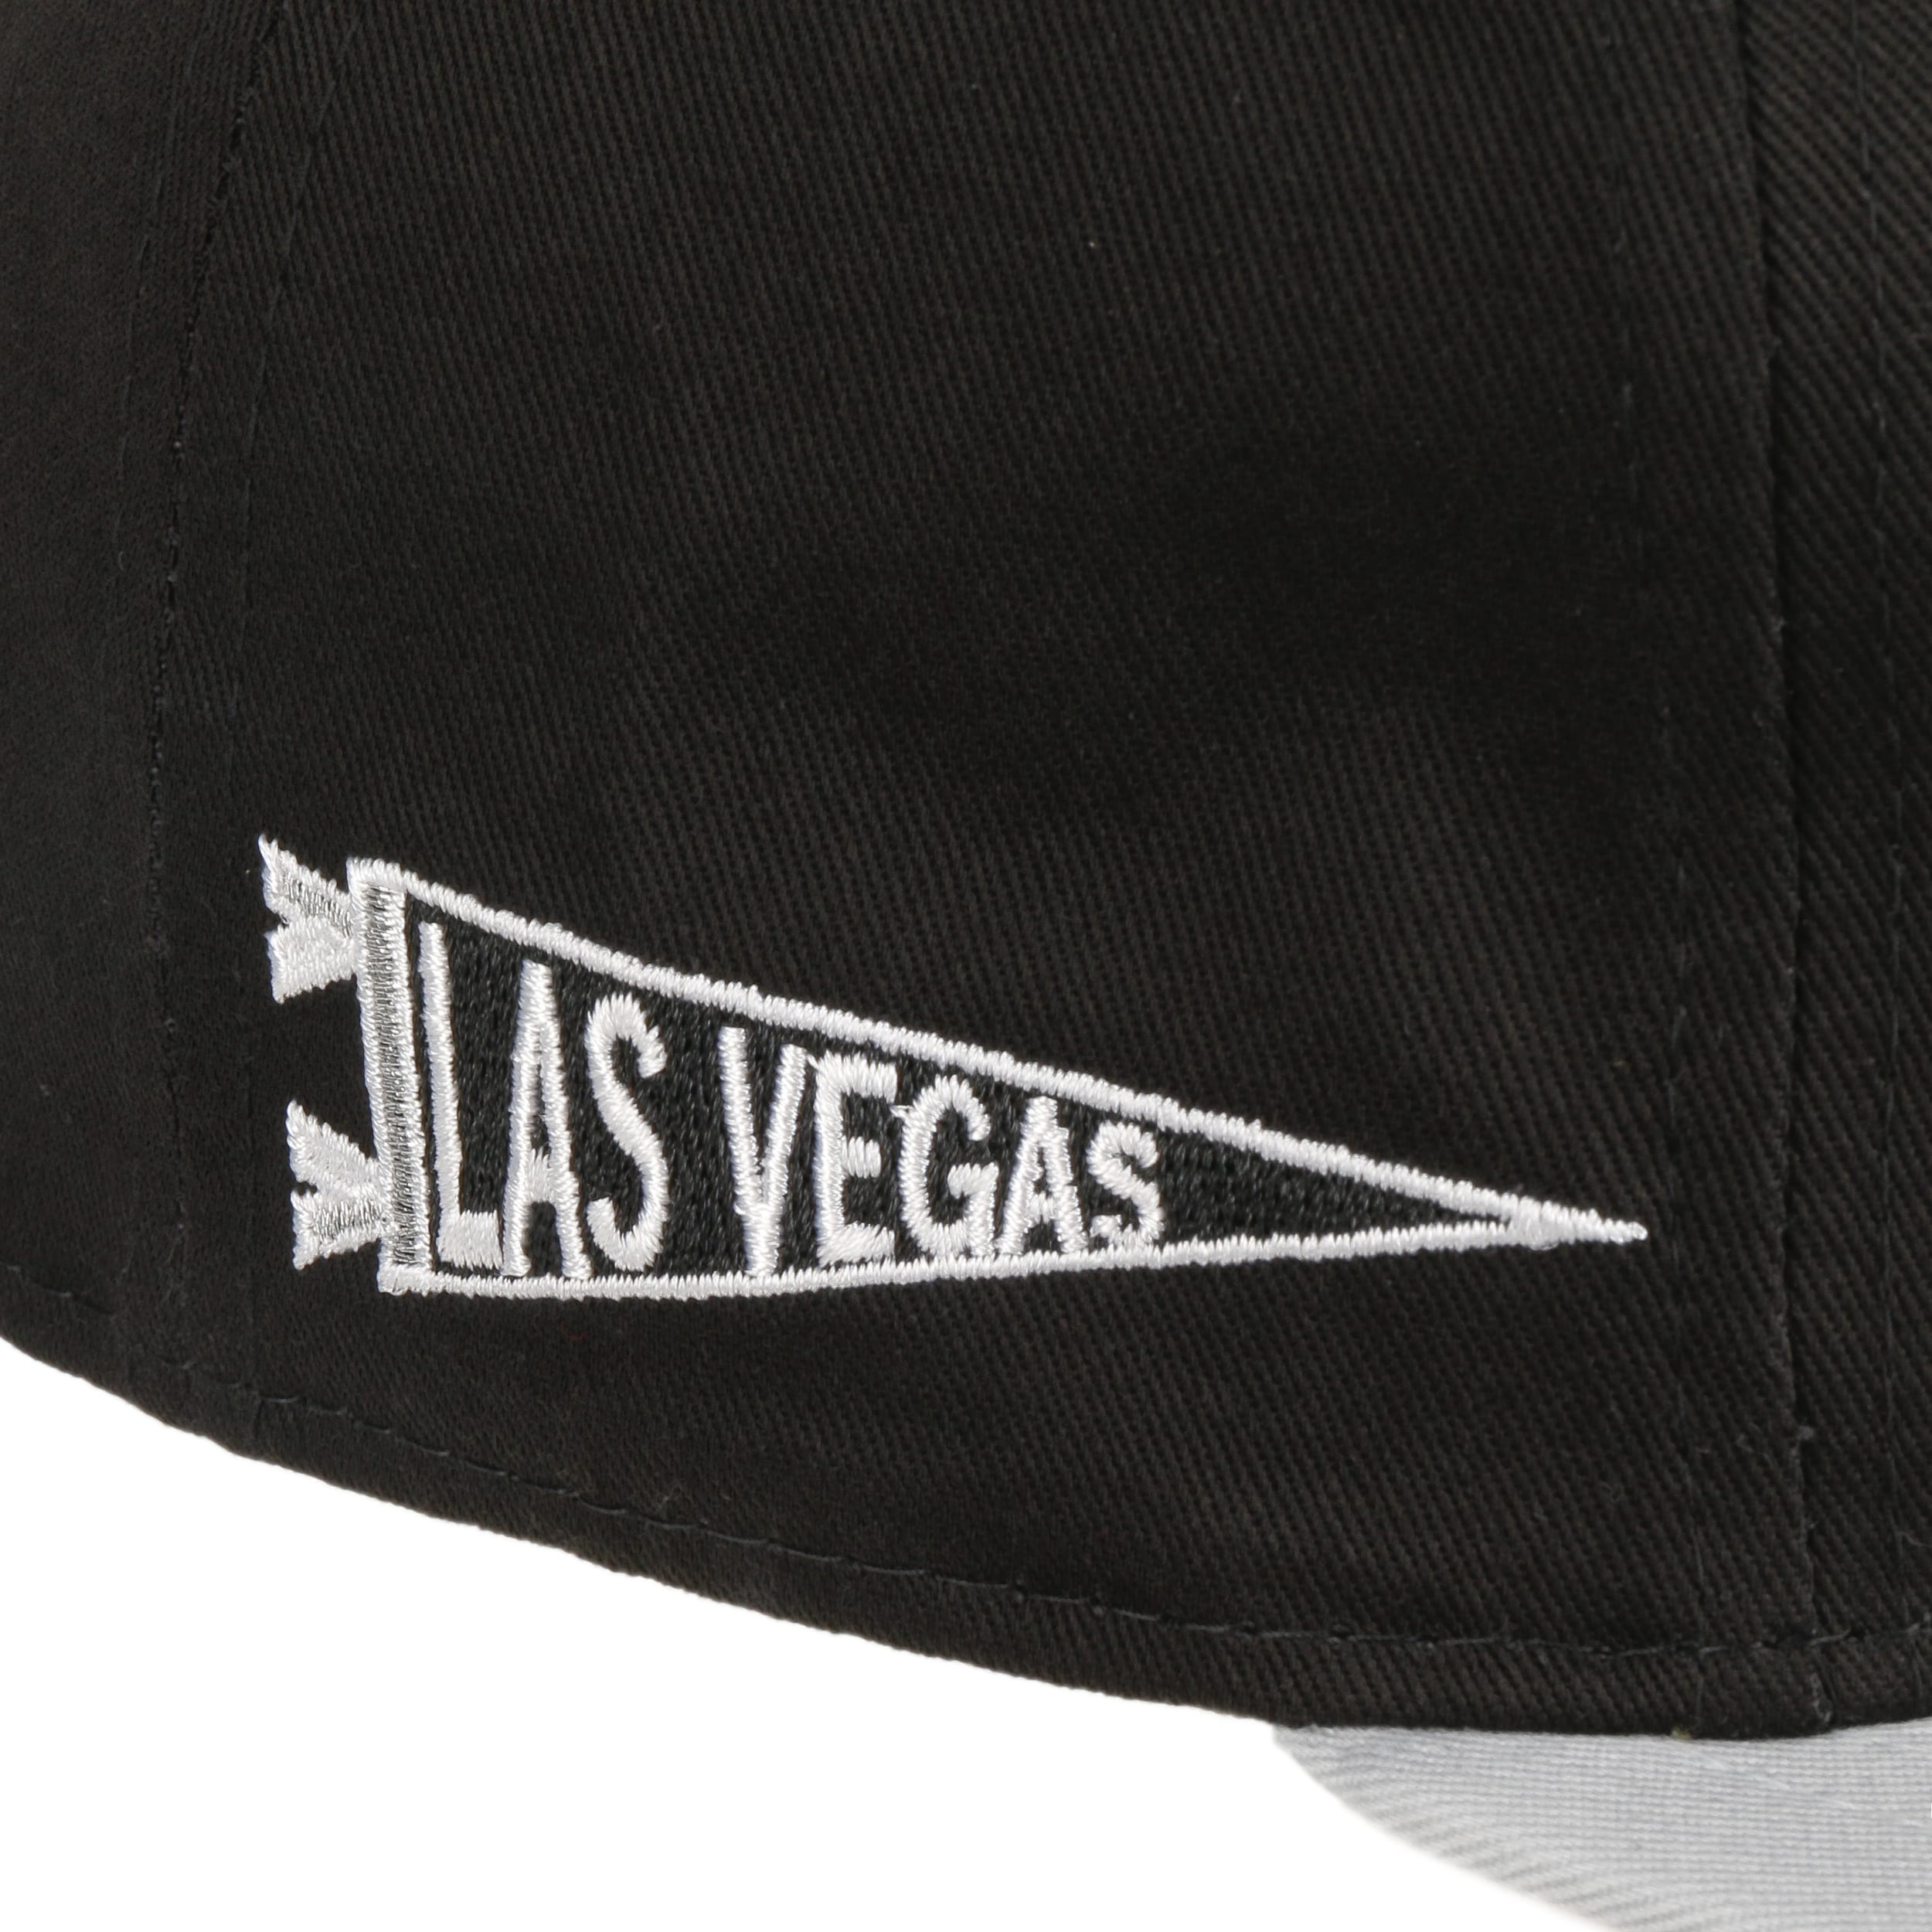 New Era 59Fifty Las Vegas Raiders City Original Hat - Black